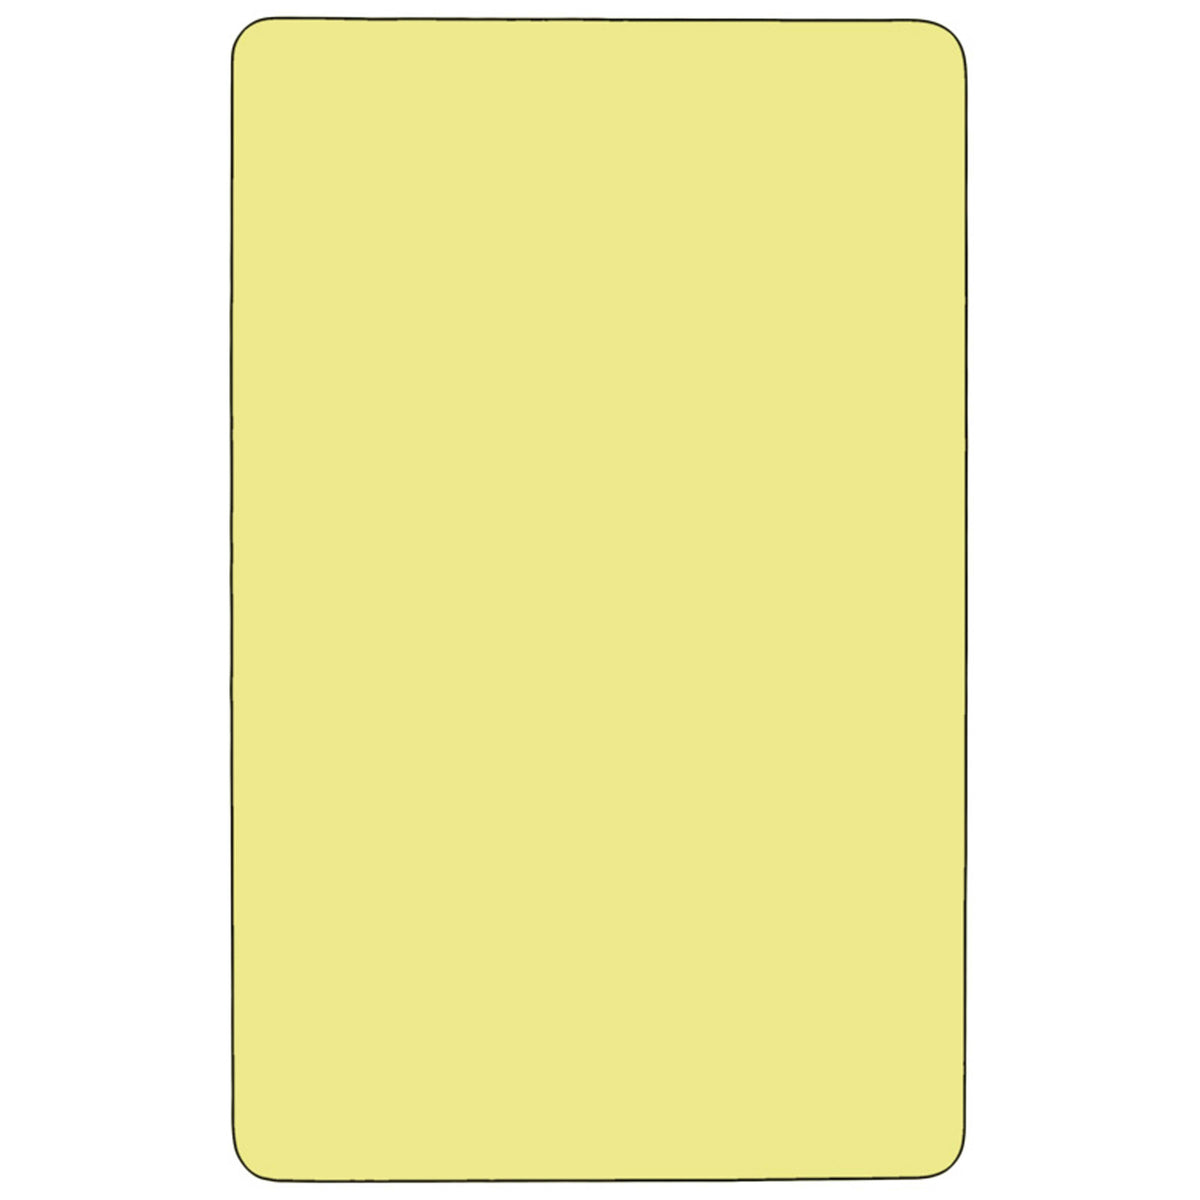 Yellow |#| 30inchW x 72inchL Rectangular Yellow Thermal Laminate Adjustable Activity Table